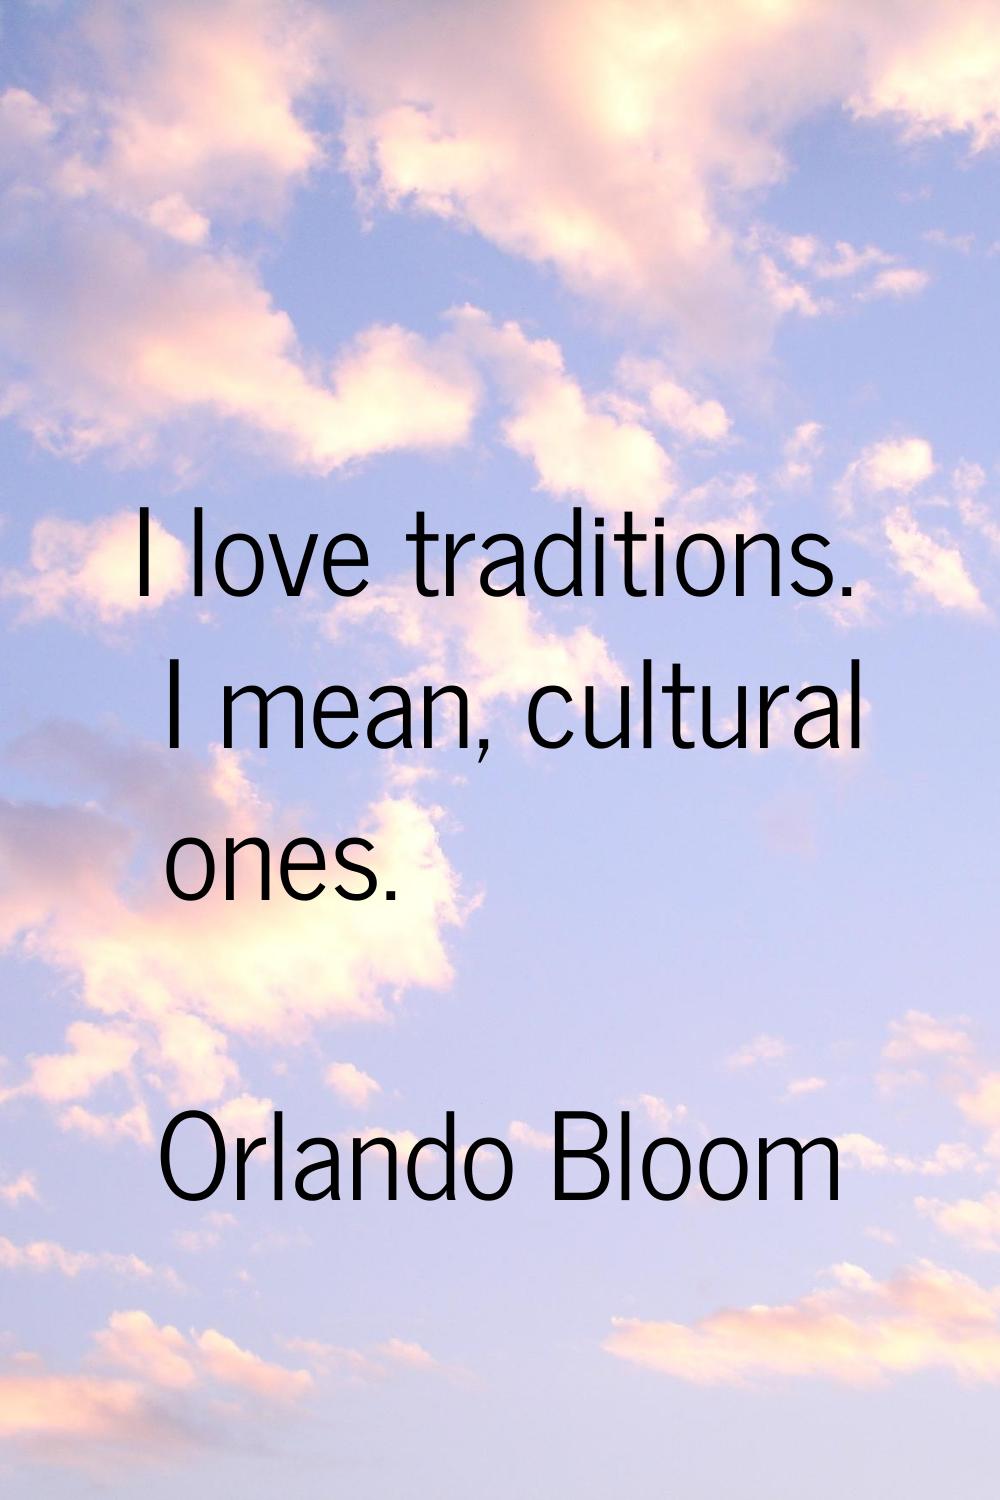 I love traditions. I mean, cultural ones.